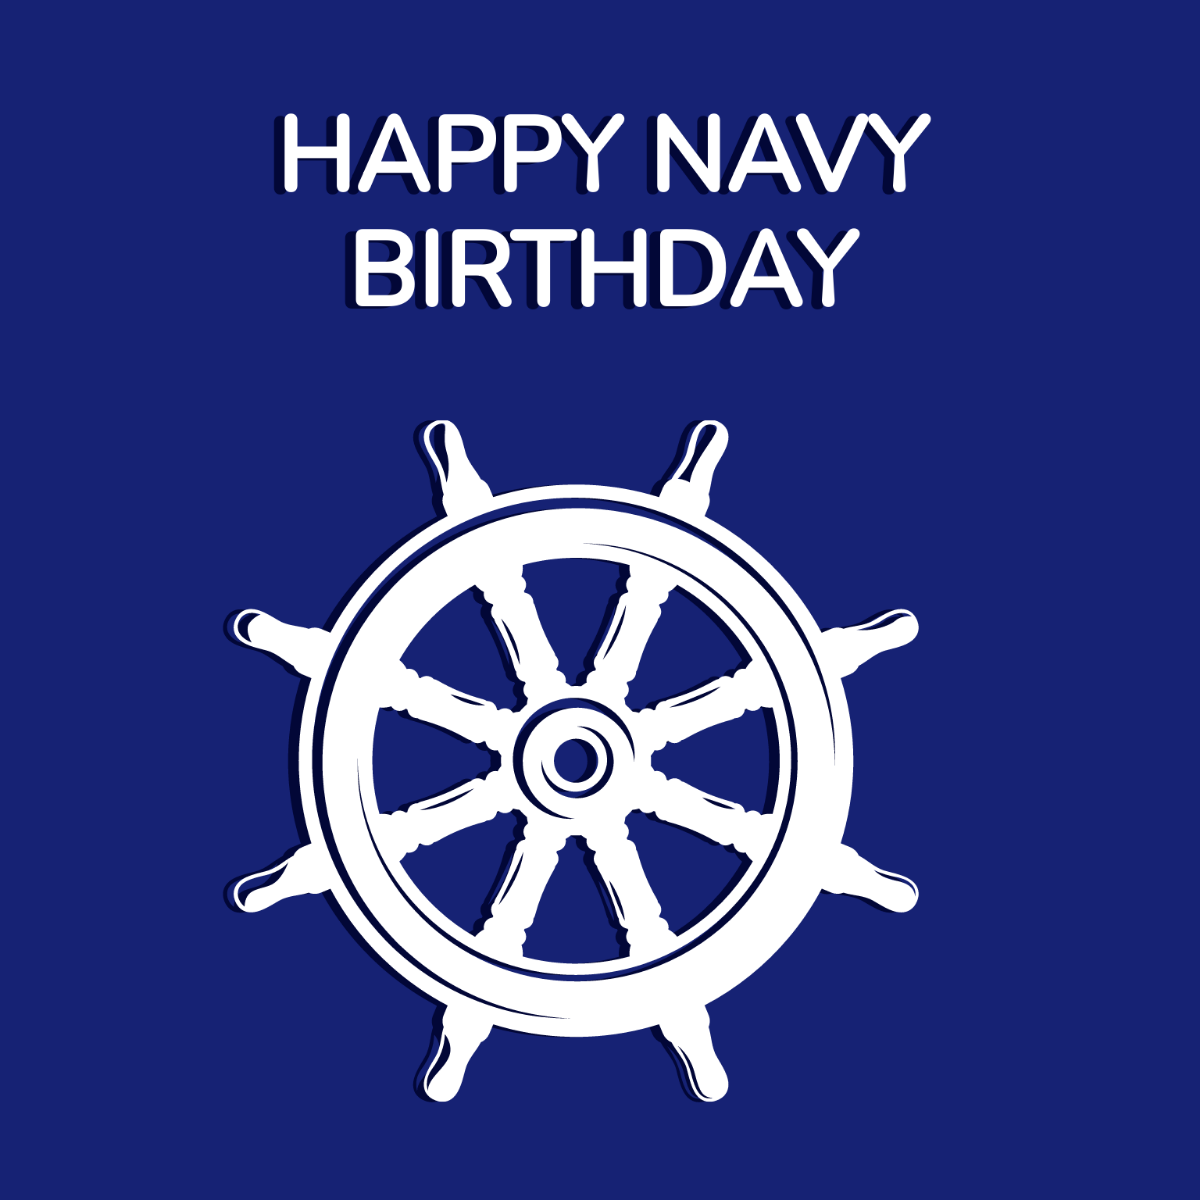 Happy Navy Birthday Vector